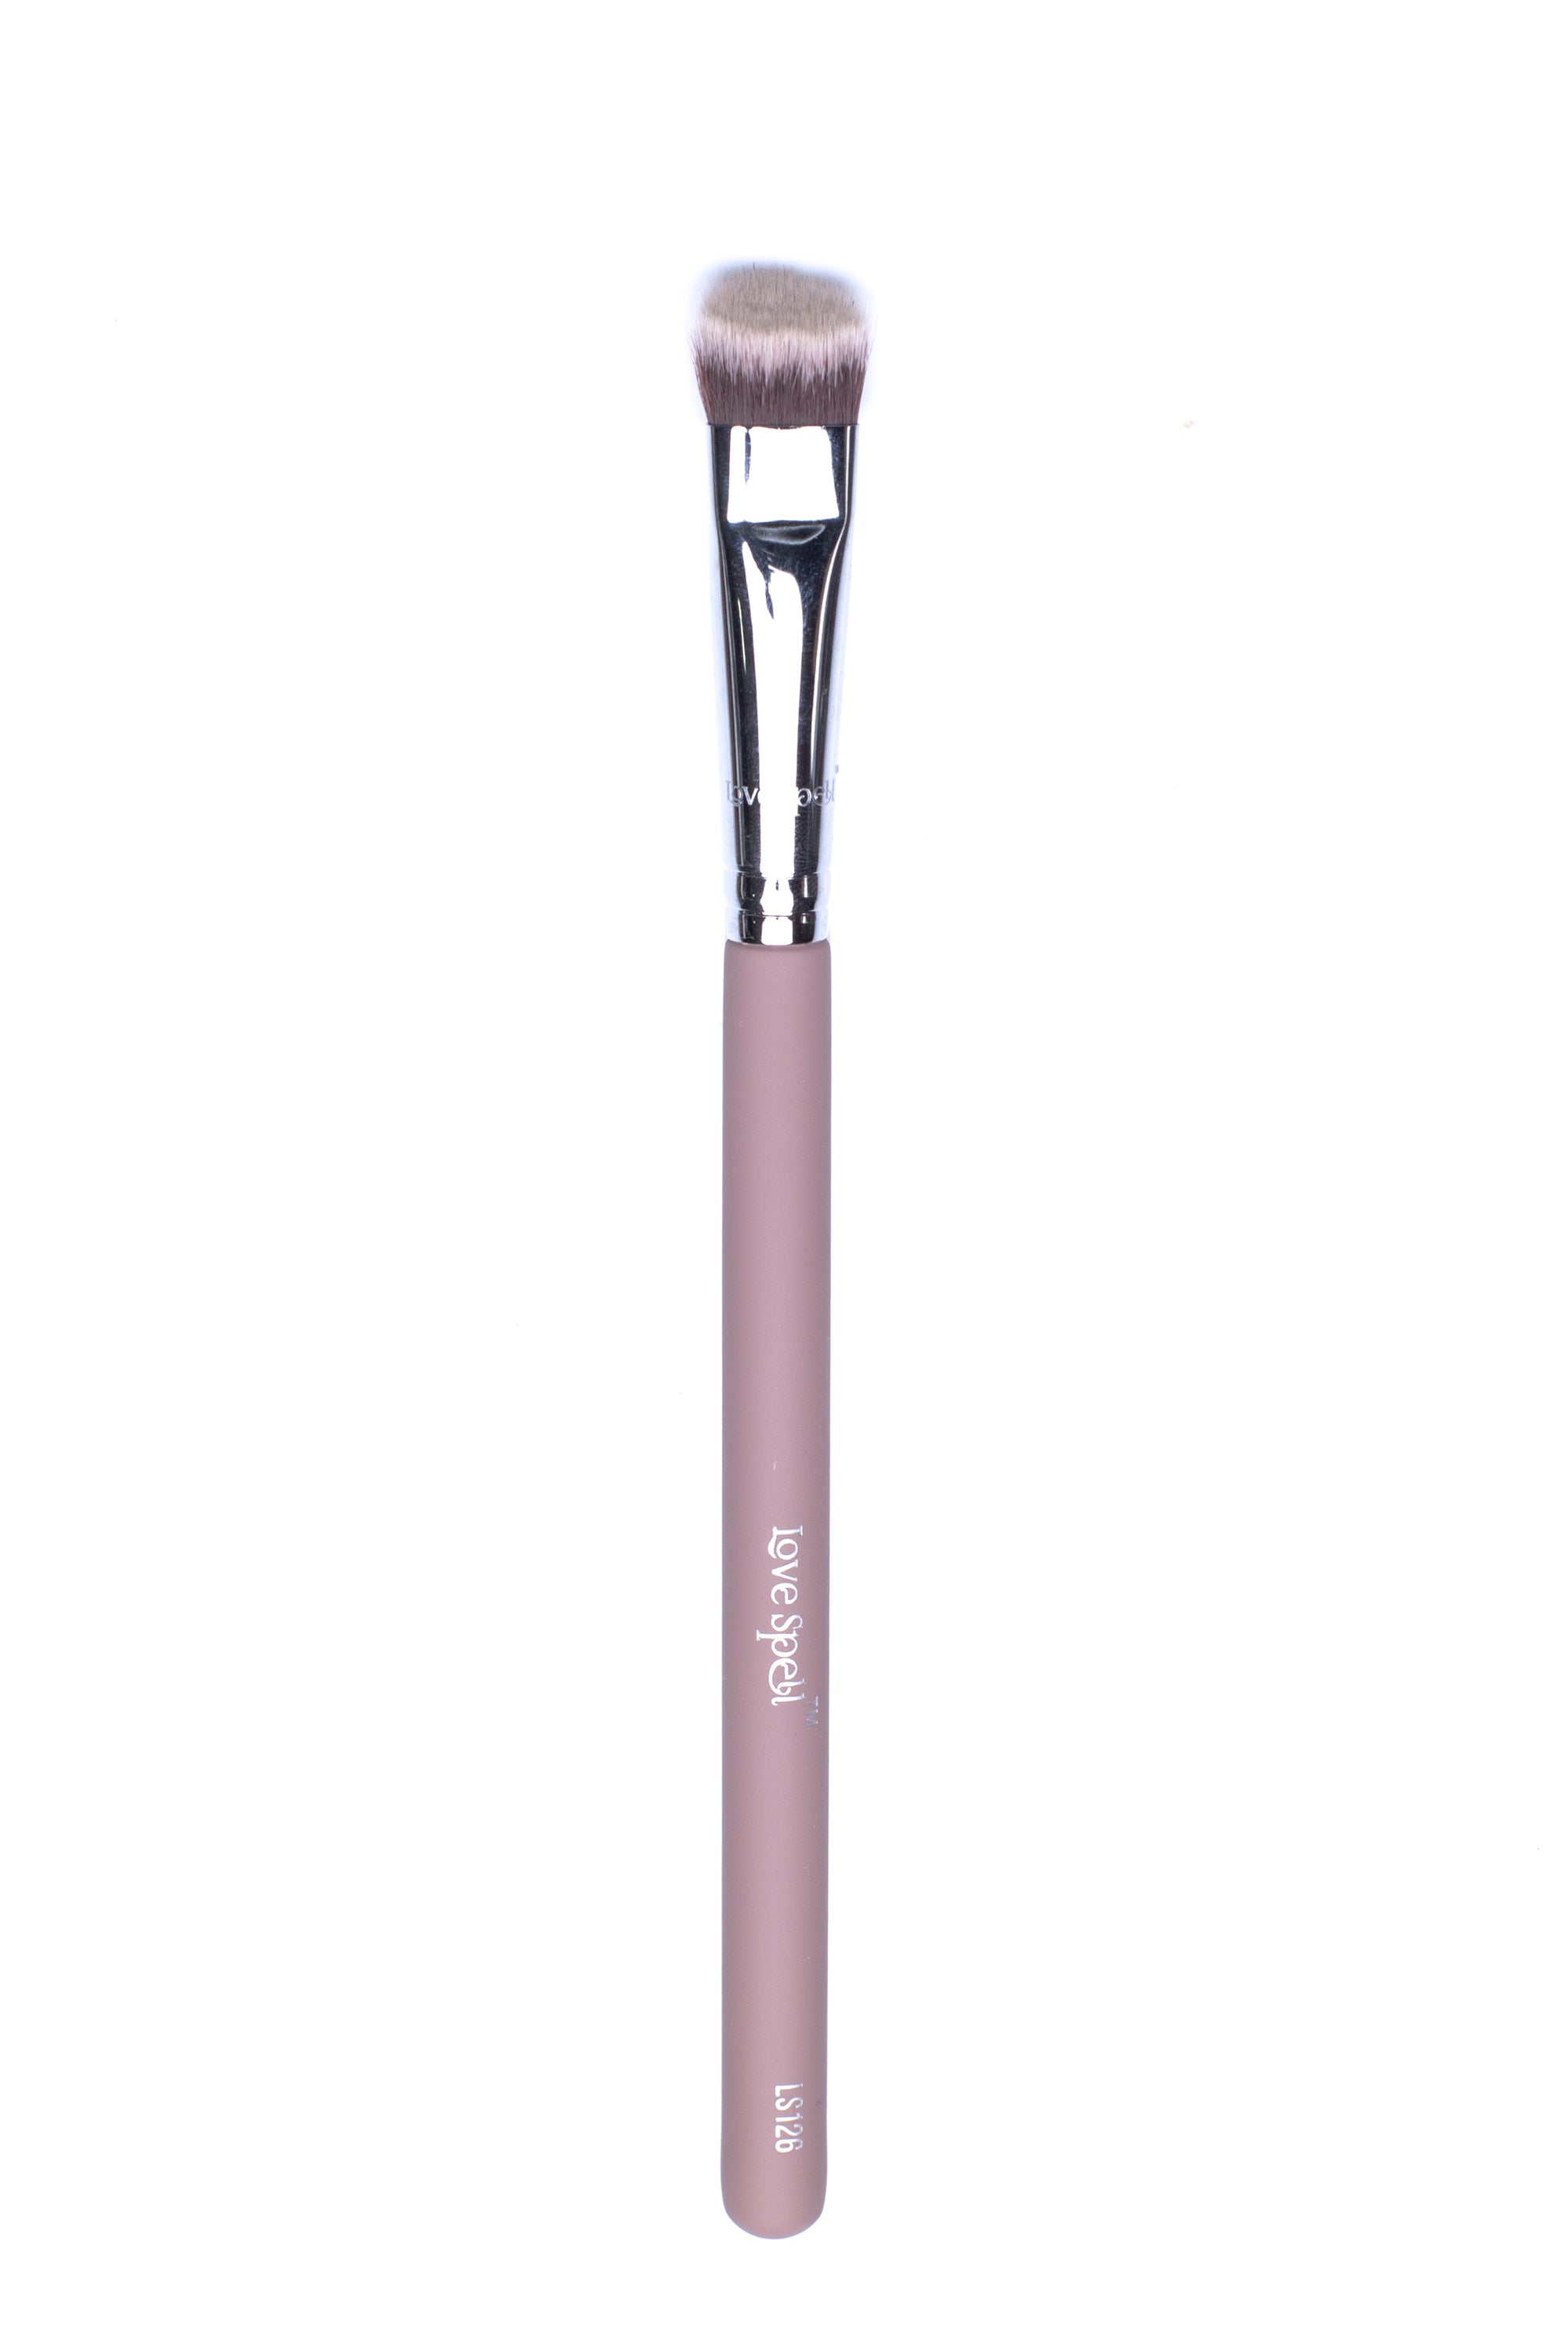 Sally's Spell - LS 126 Angled concealer brush